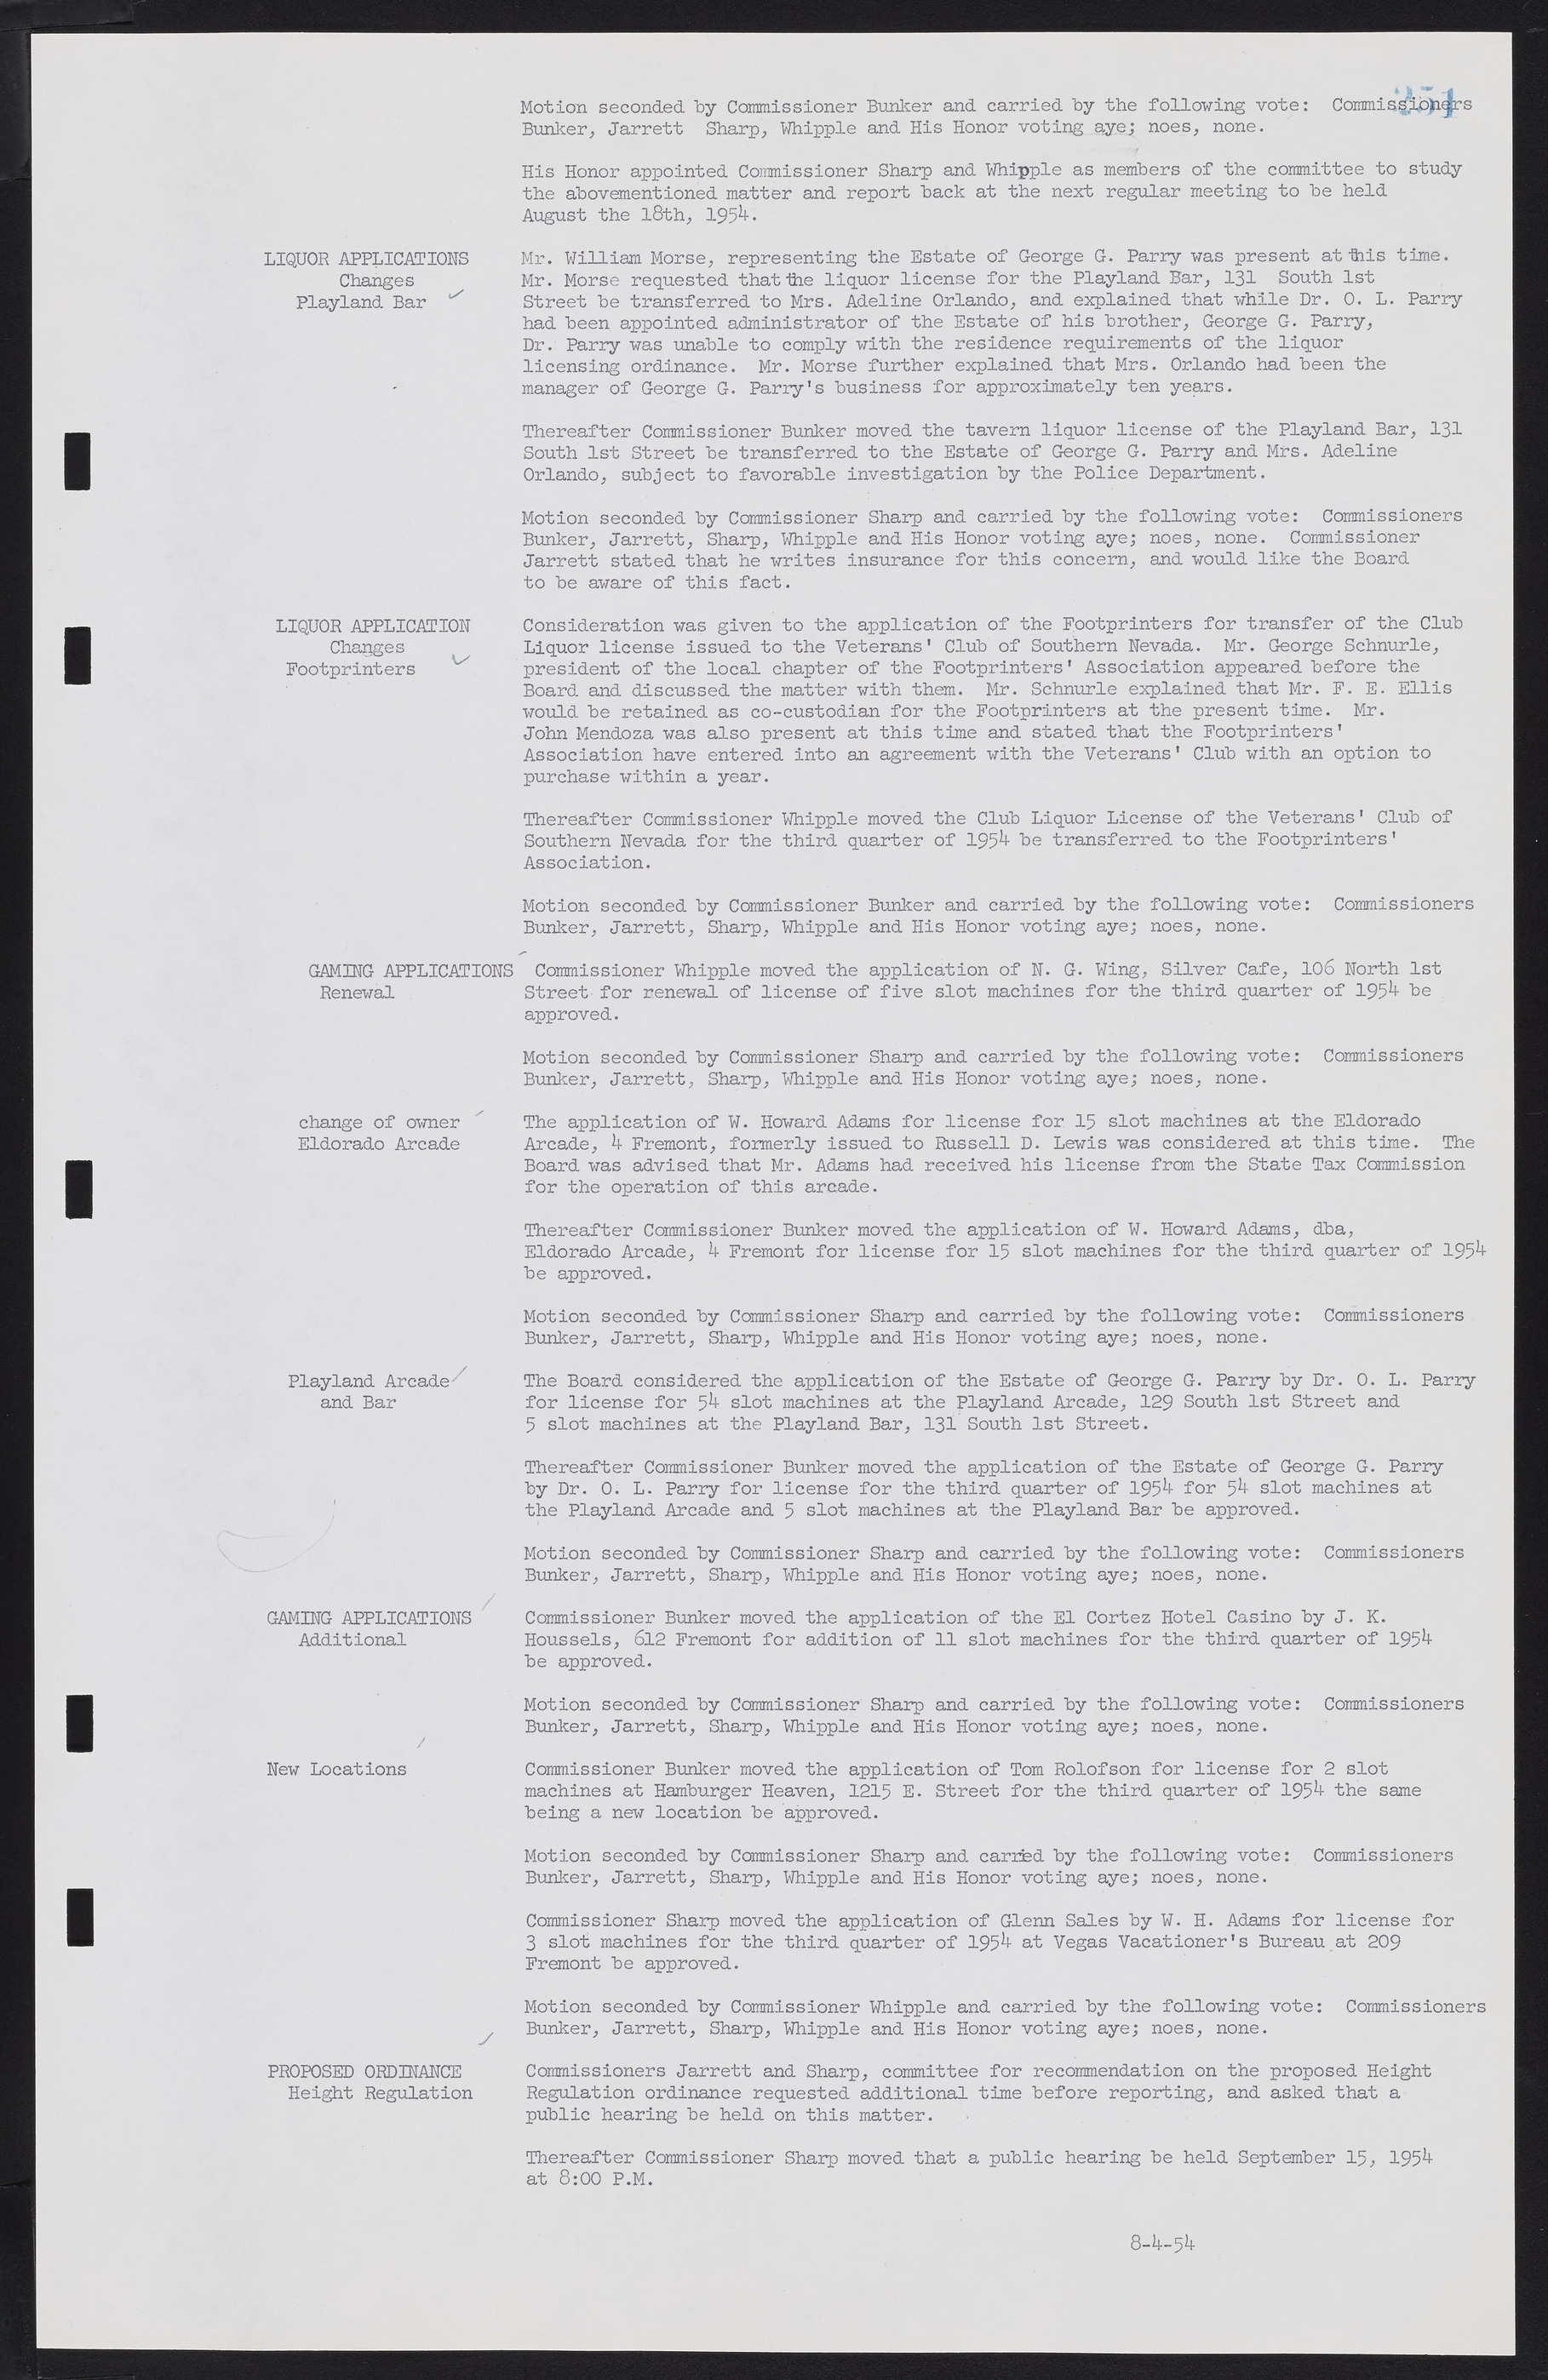 Las Vegas City Commission Minutes, February 17, 1954 to September 21, 1955, lvc000009-257